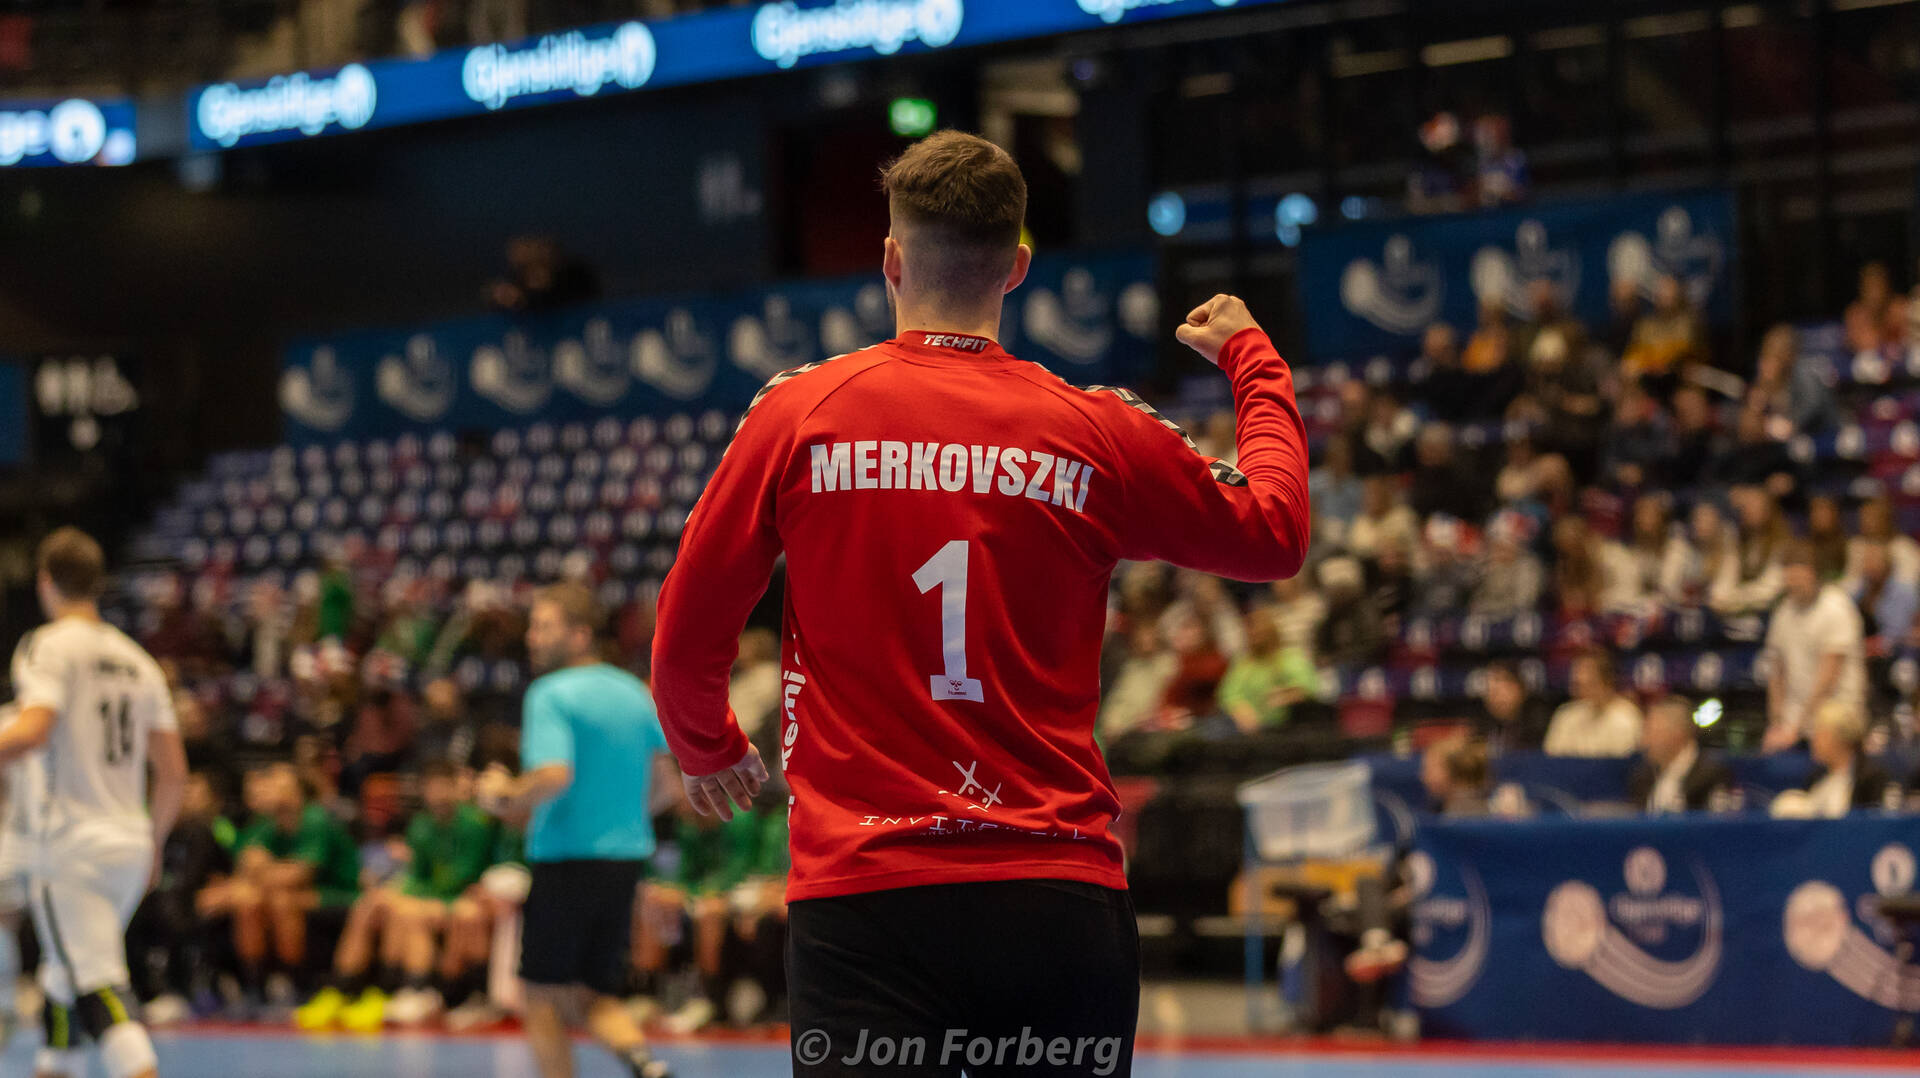 Huss student Pál Merkovszki set to achieve a historic victory at the Men's Handball World Championship